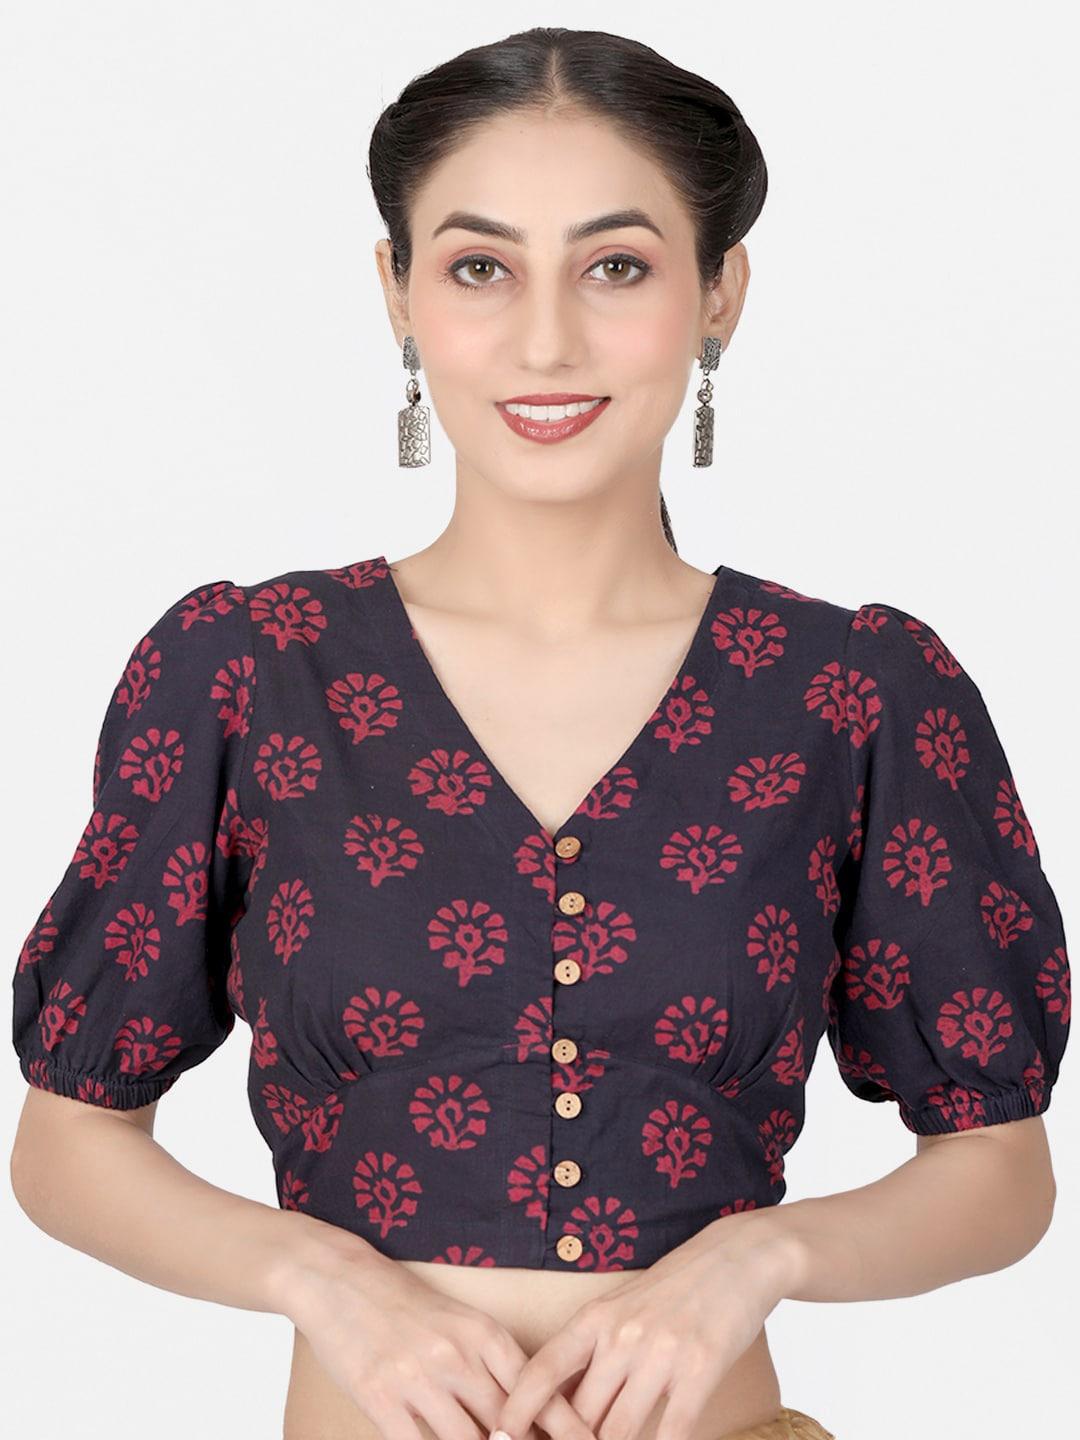 llajja block printed pure cotton readymade saree blouse